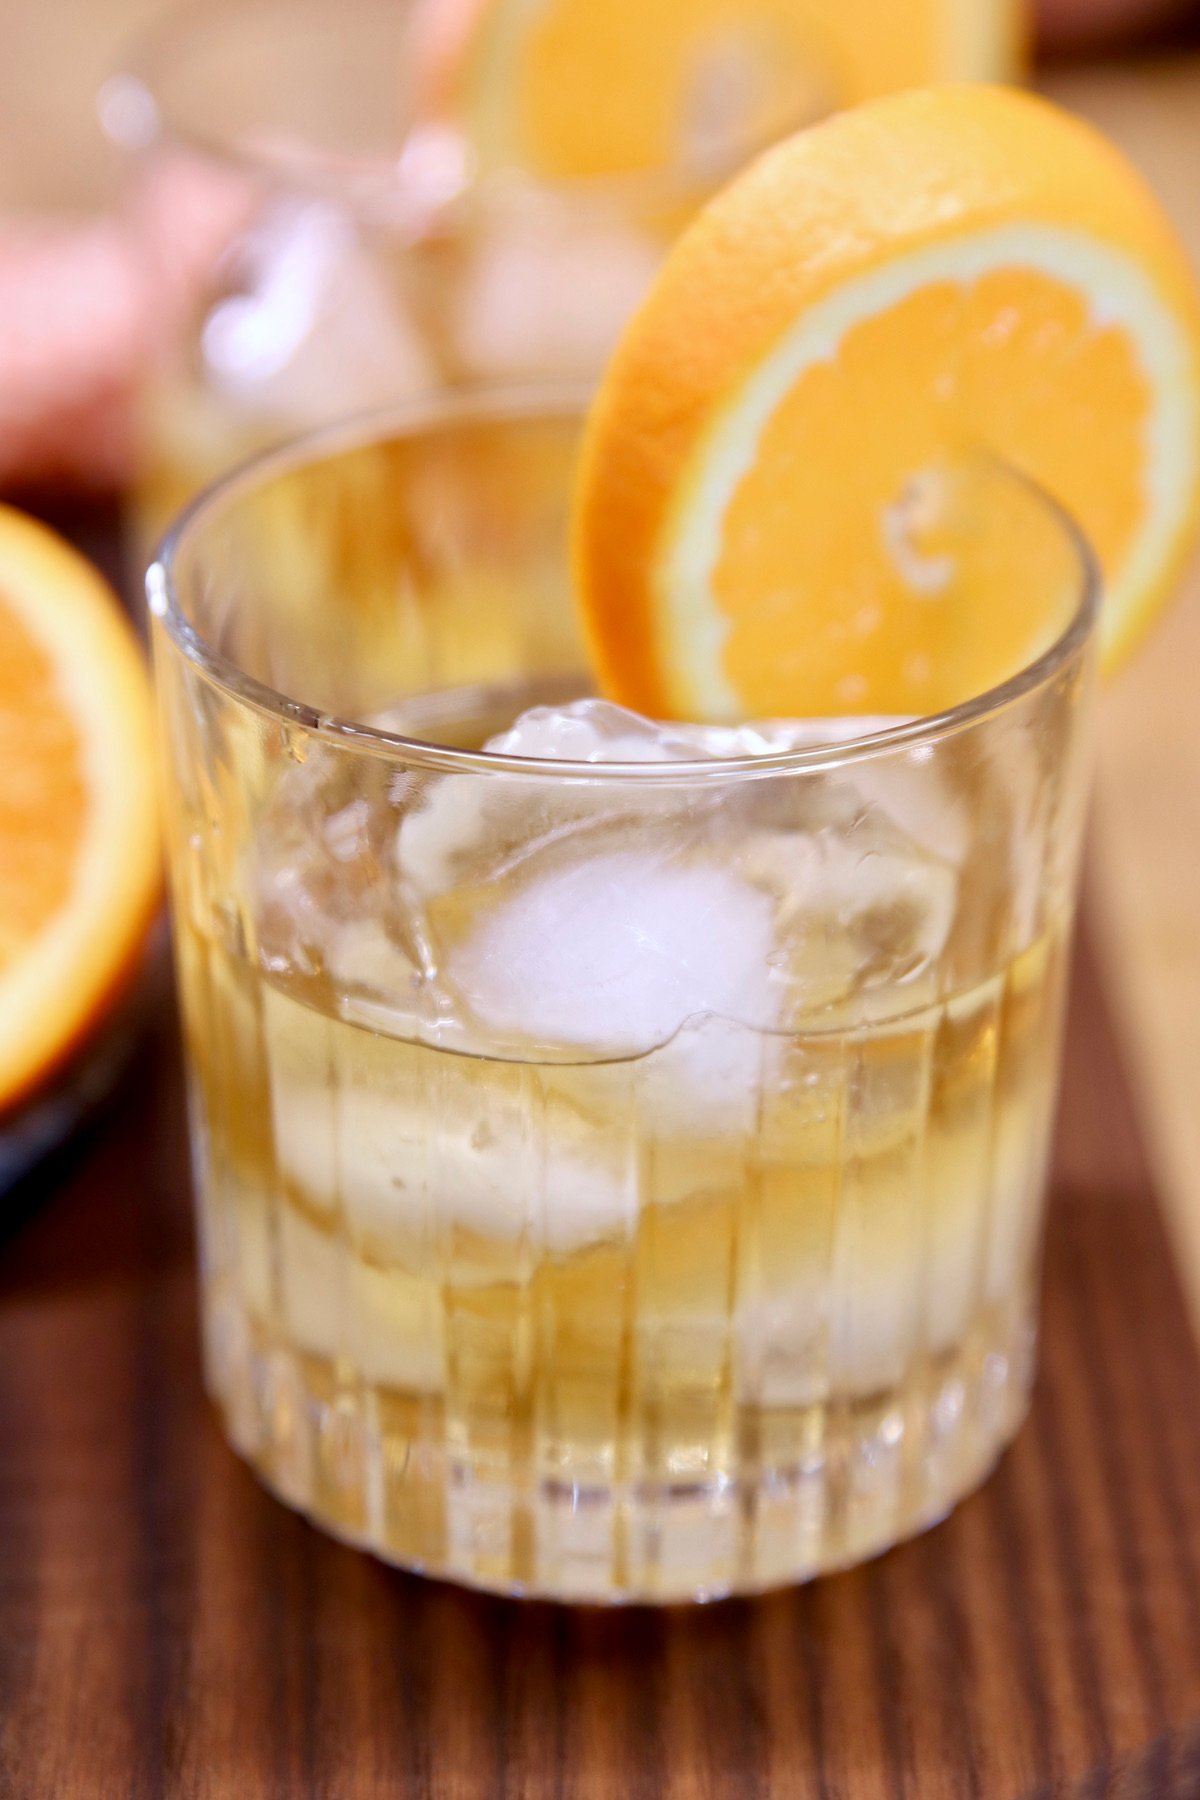 Smoked Old Fashioned Cocktail with orange garnish.